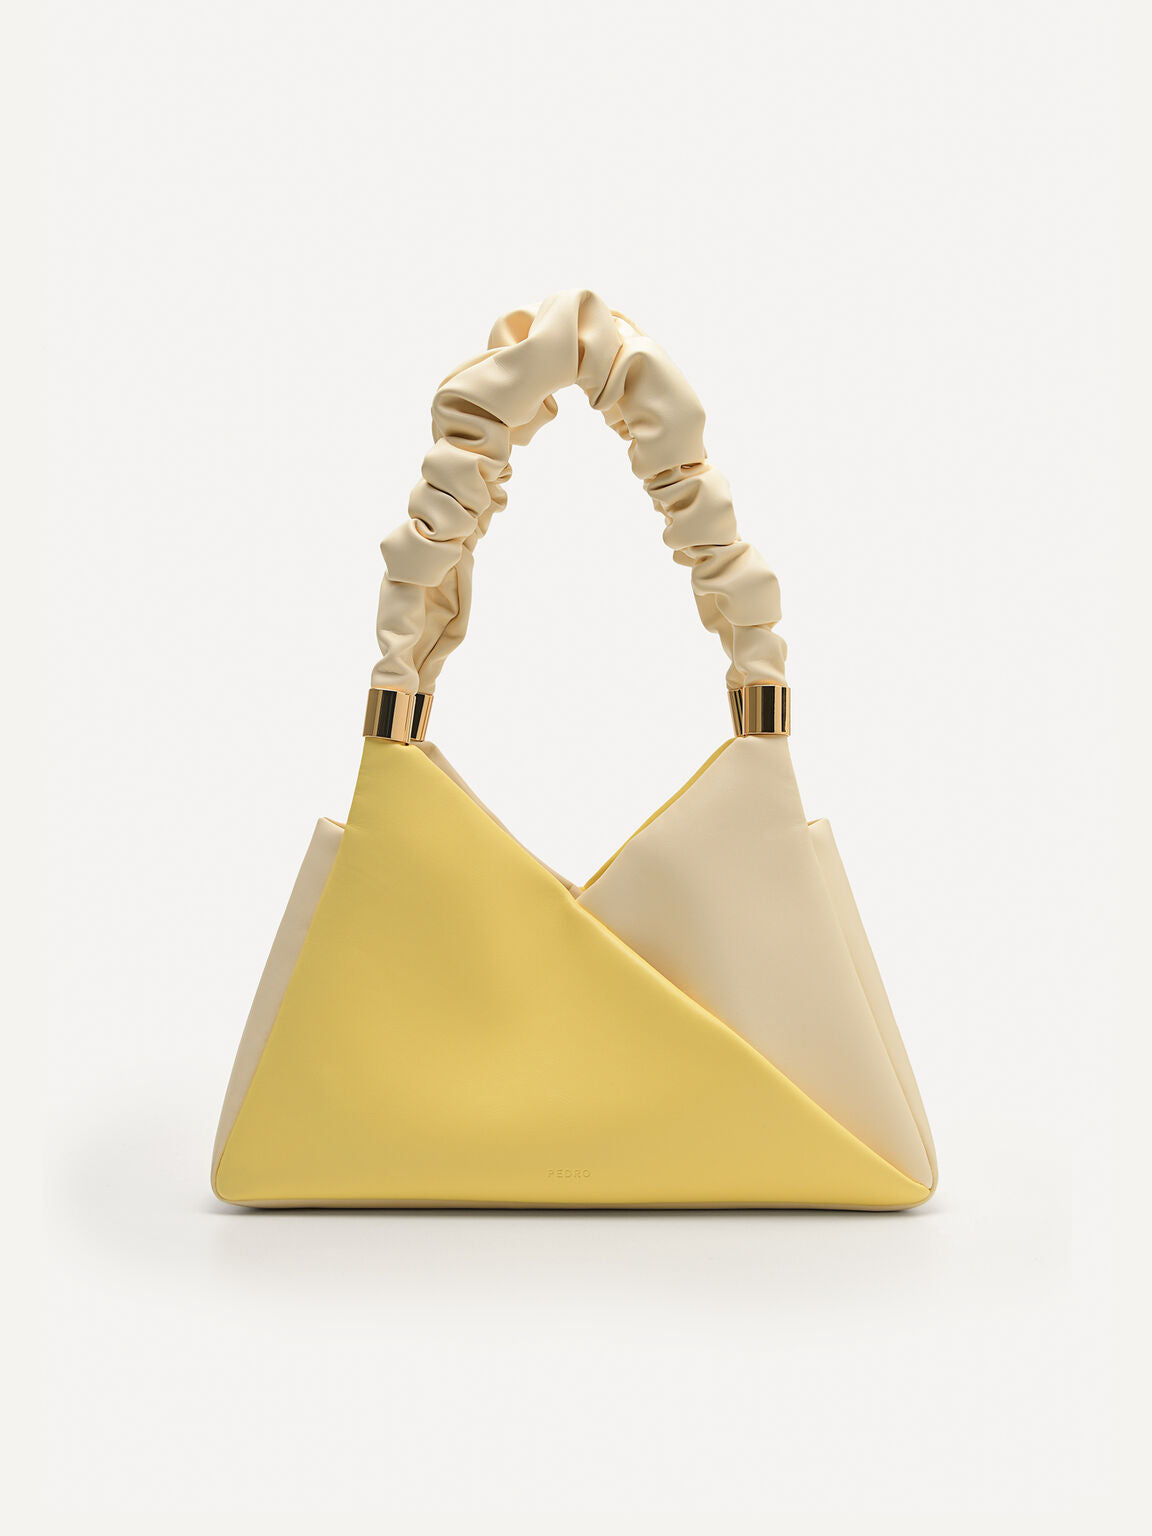 Buy Yellow Handbags for Women by Pedro Online